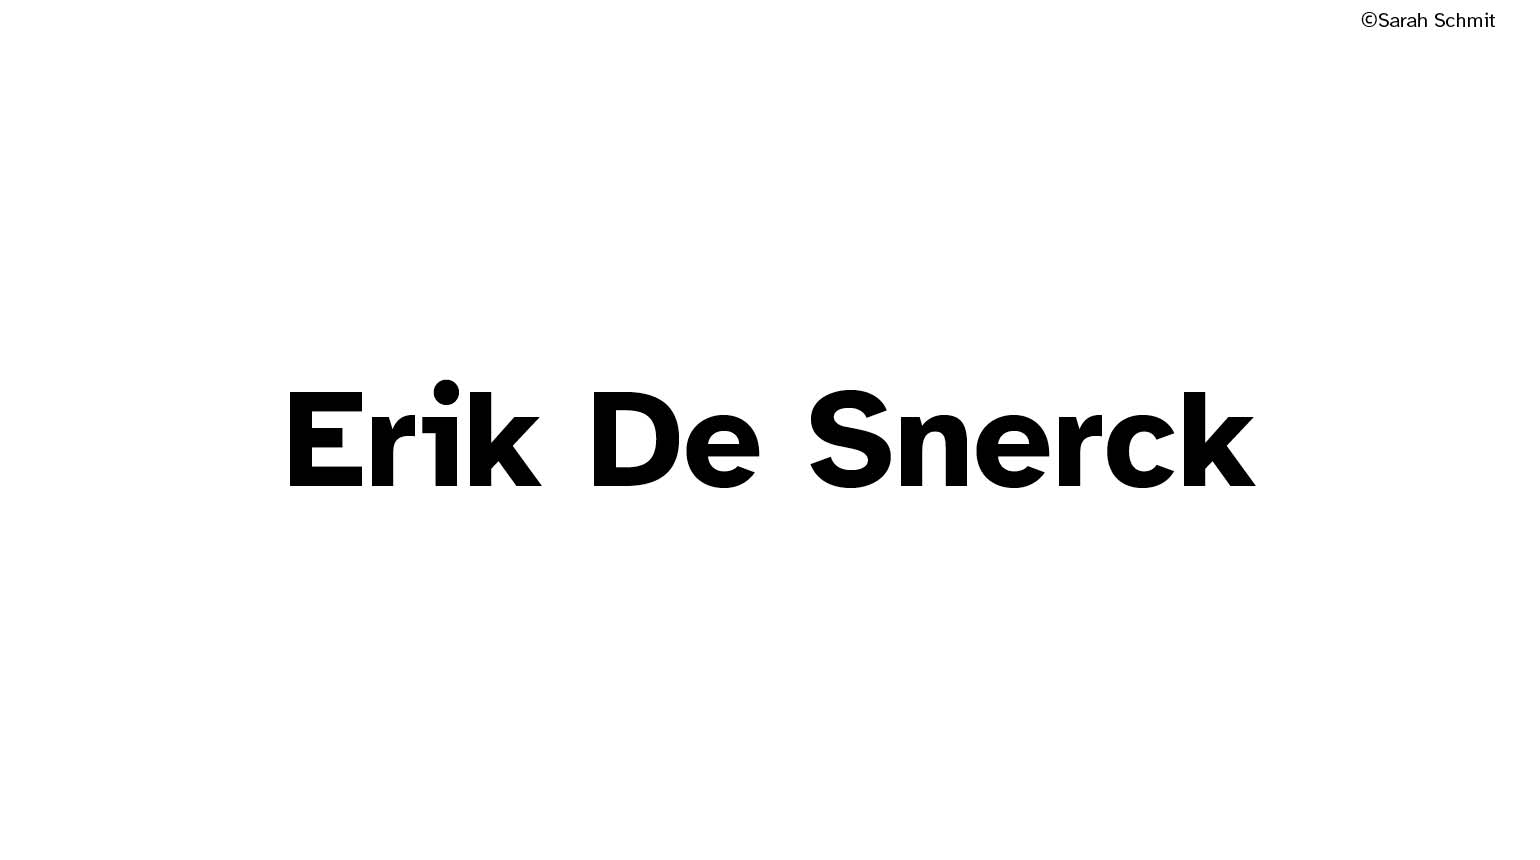 Erik De Snerck